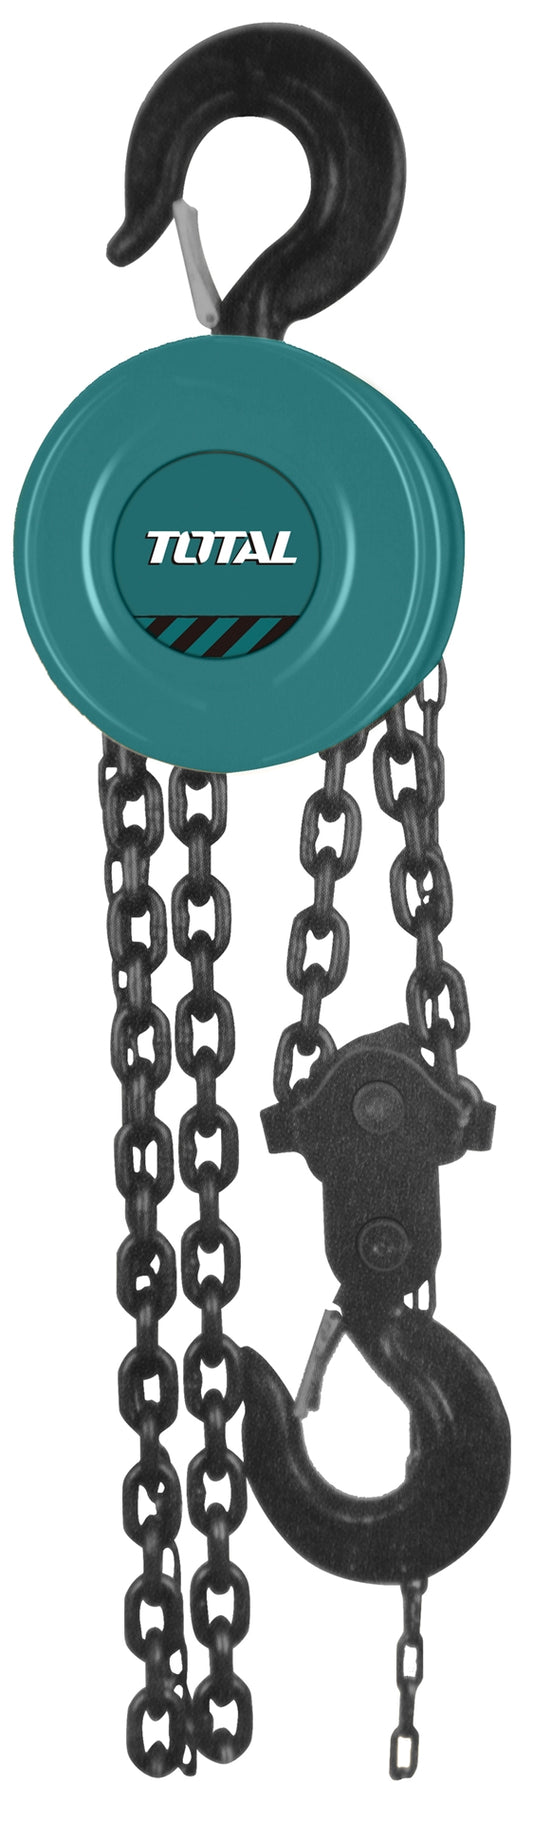 TOTAL Chain Block - 2ton